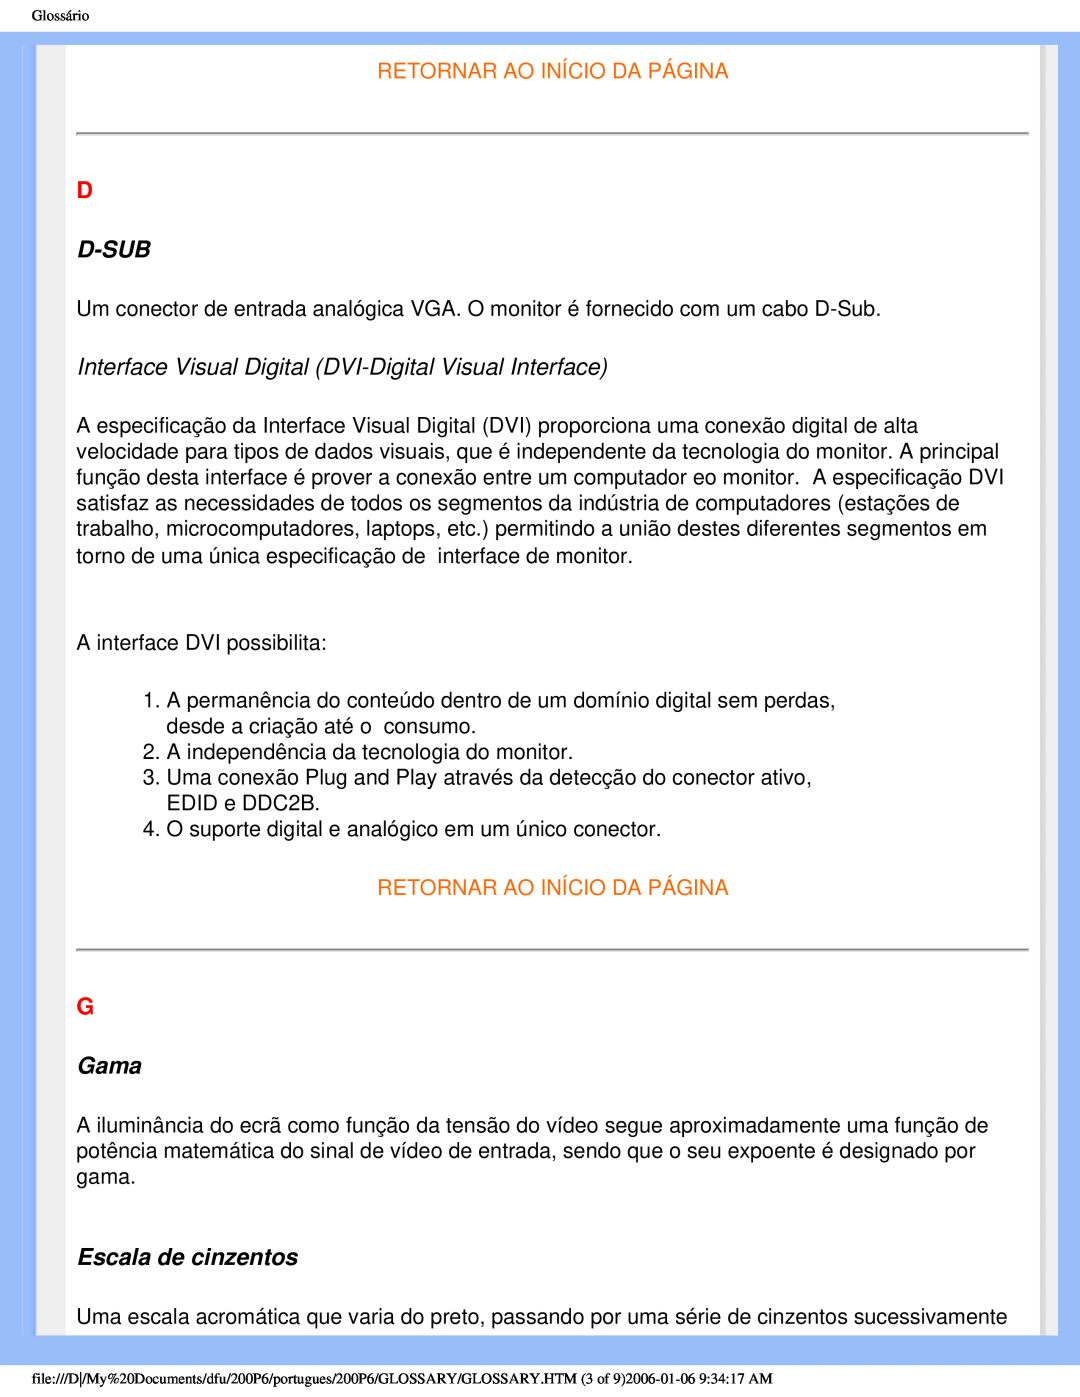 Philips 200P6 user manual D-Sub, Gama, Escala de cinzentos, Interface Visual Digital DVI-Digital Visual Interface 